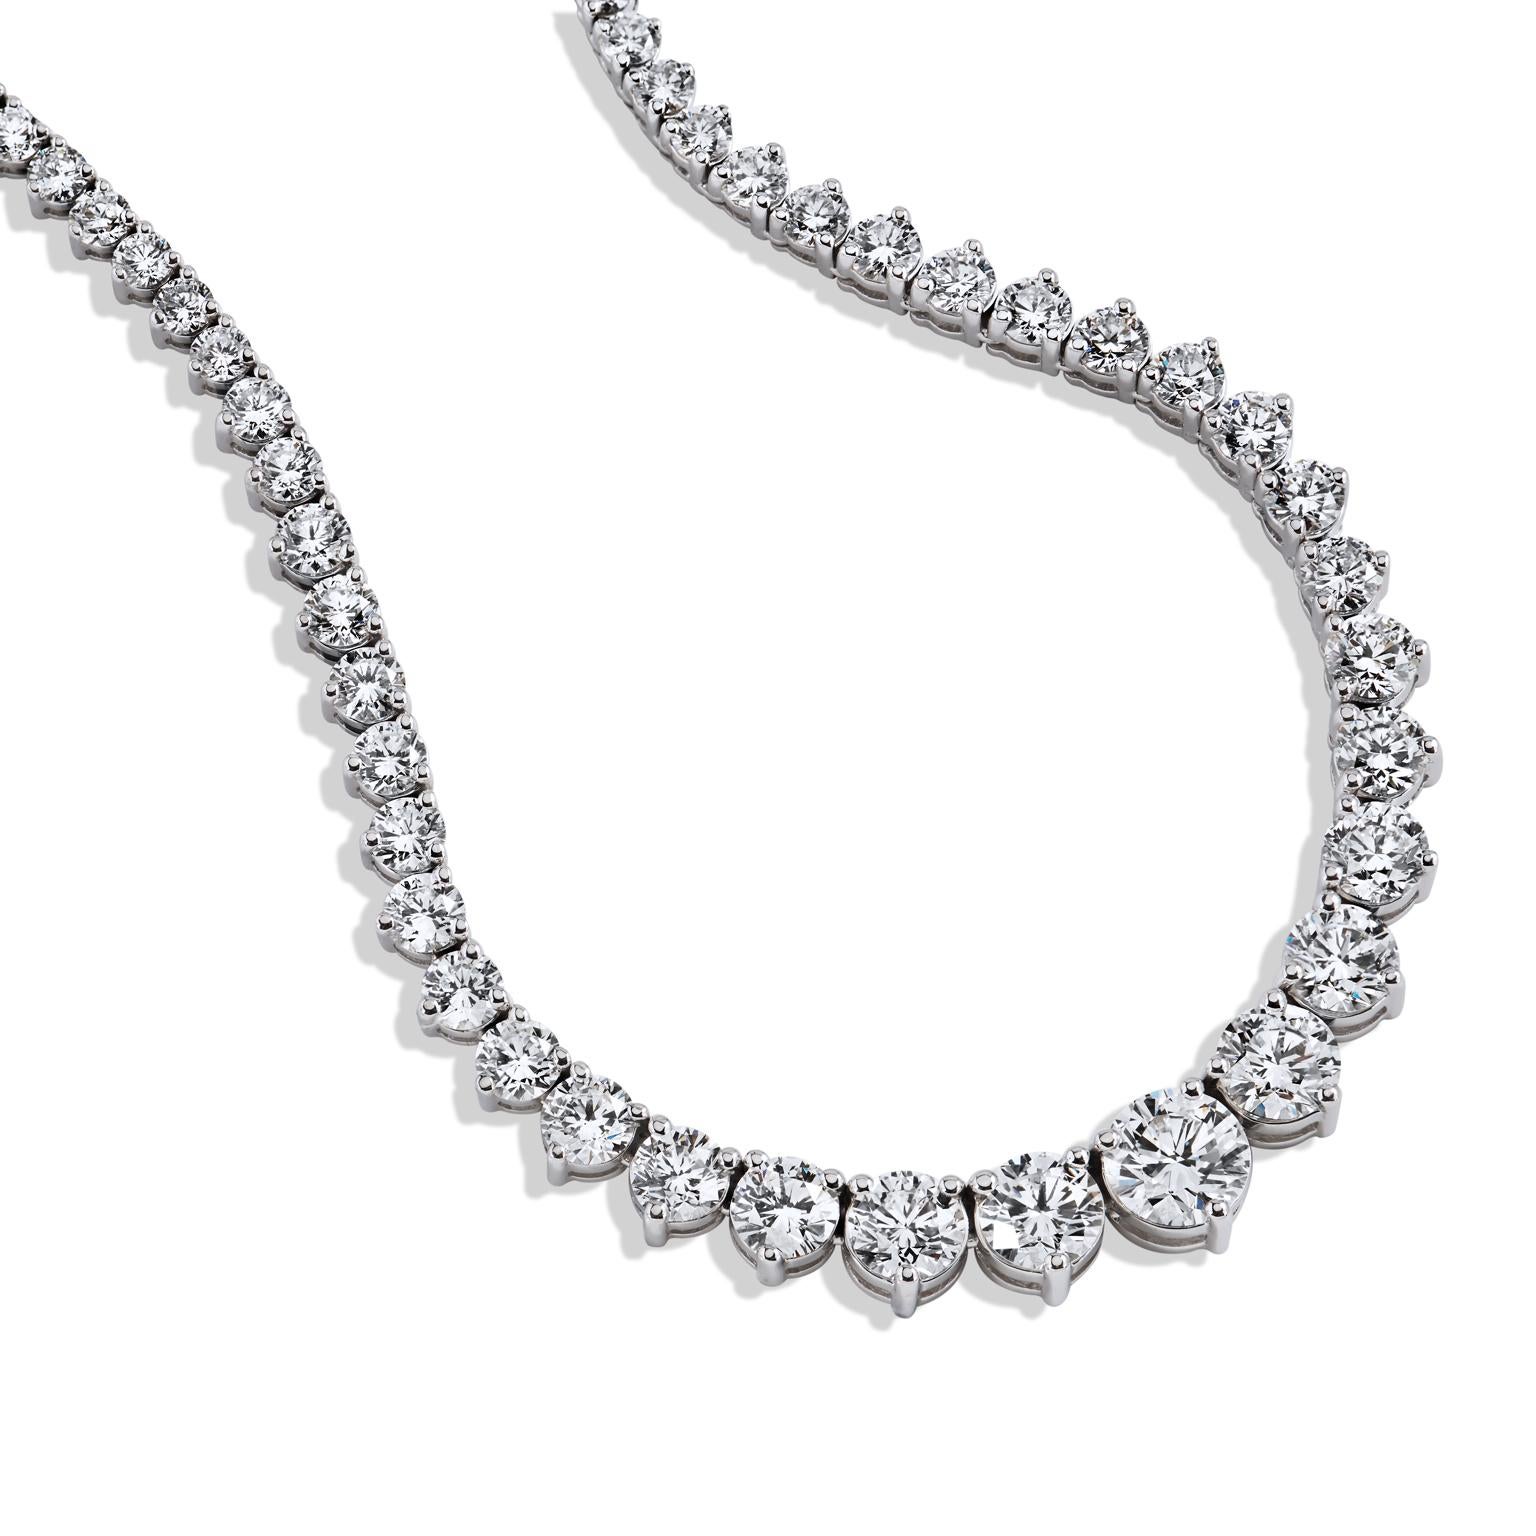 Brilliant Cut 10.13 Carat Diamond Riviera Necklace set in 18 Karat White Gold 16.5 inches Long